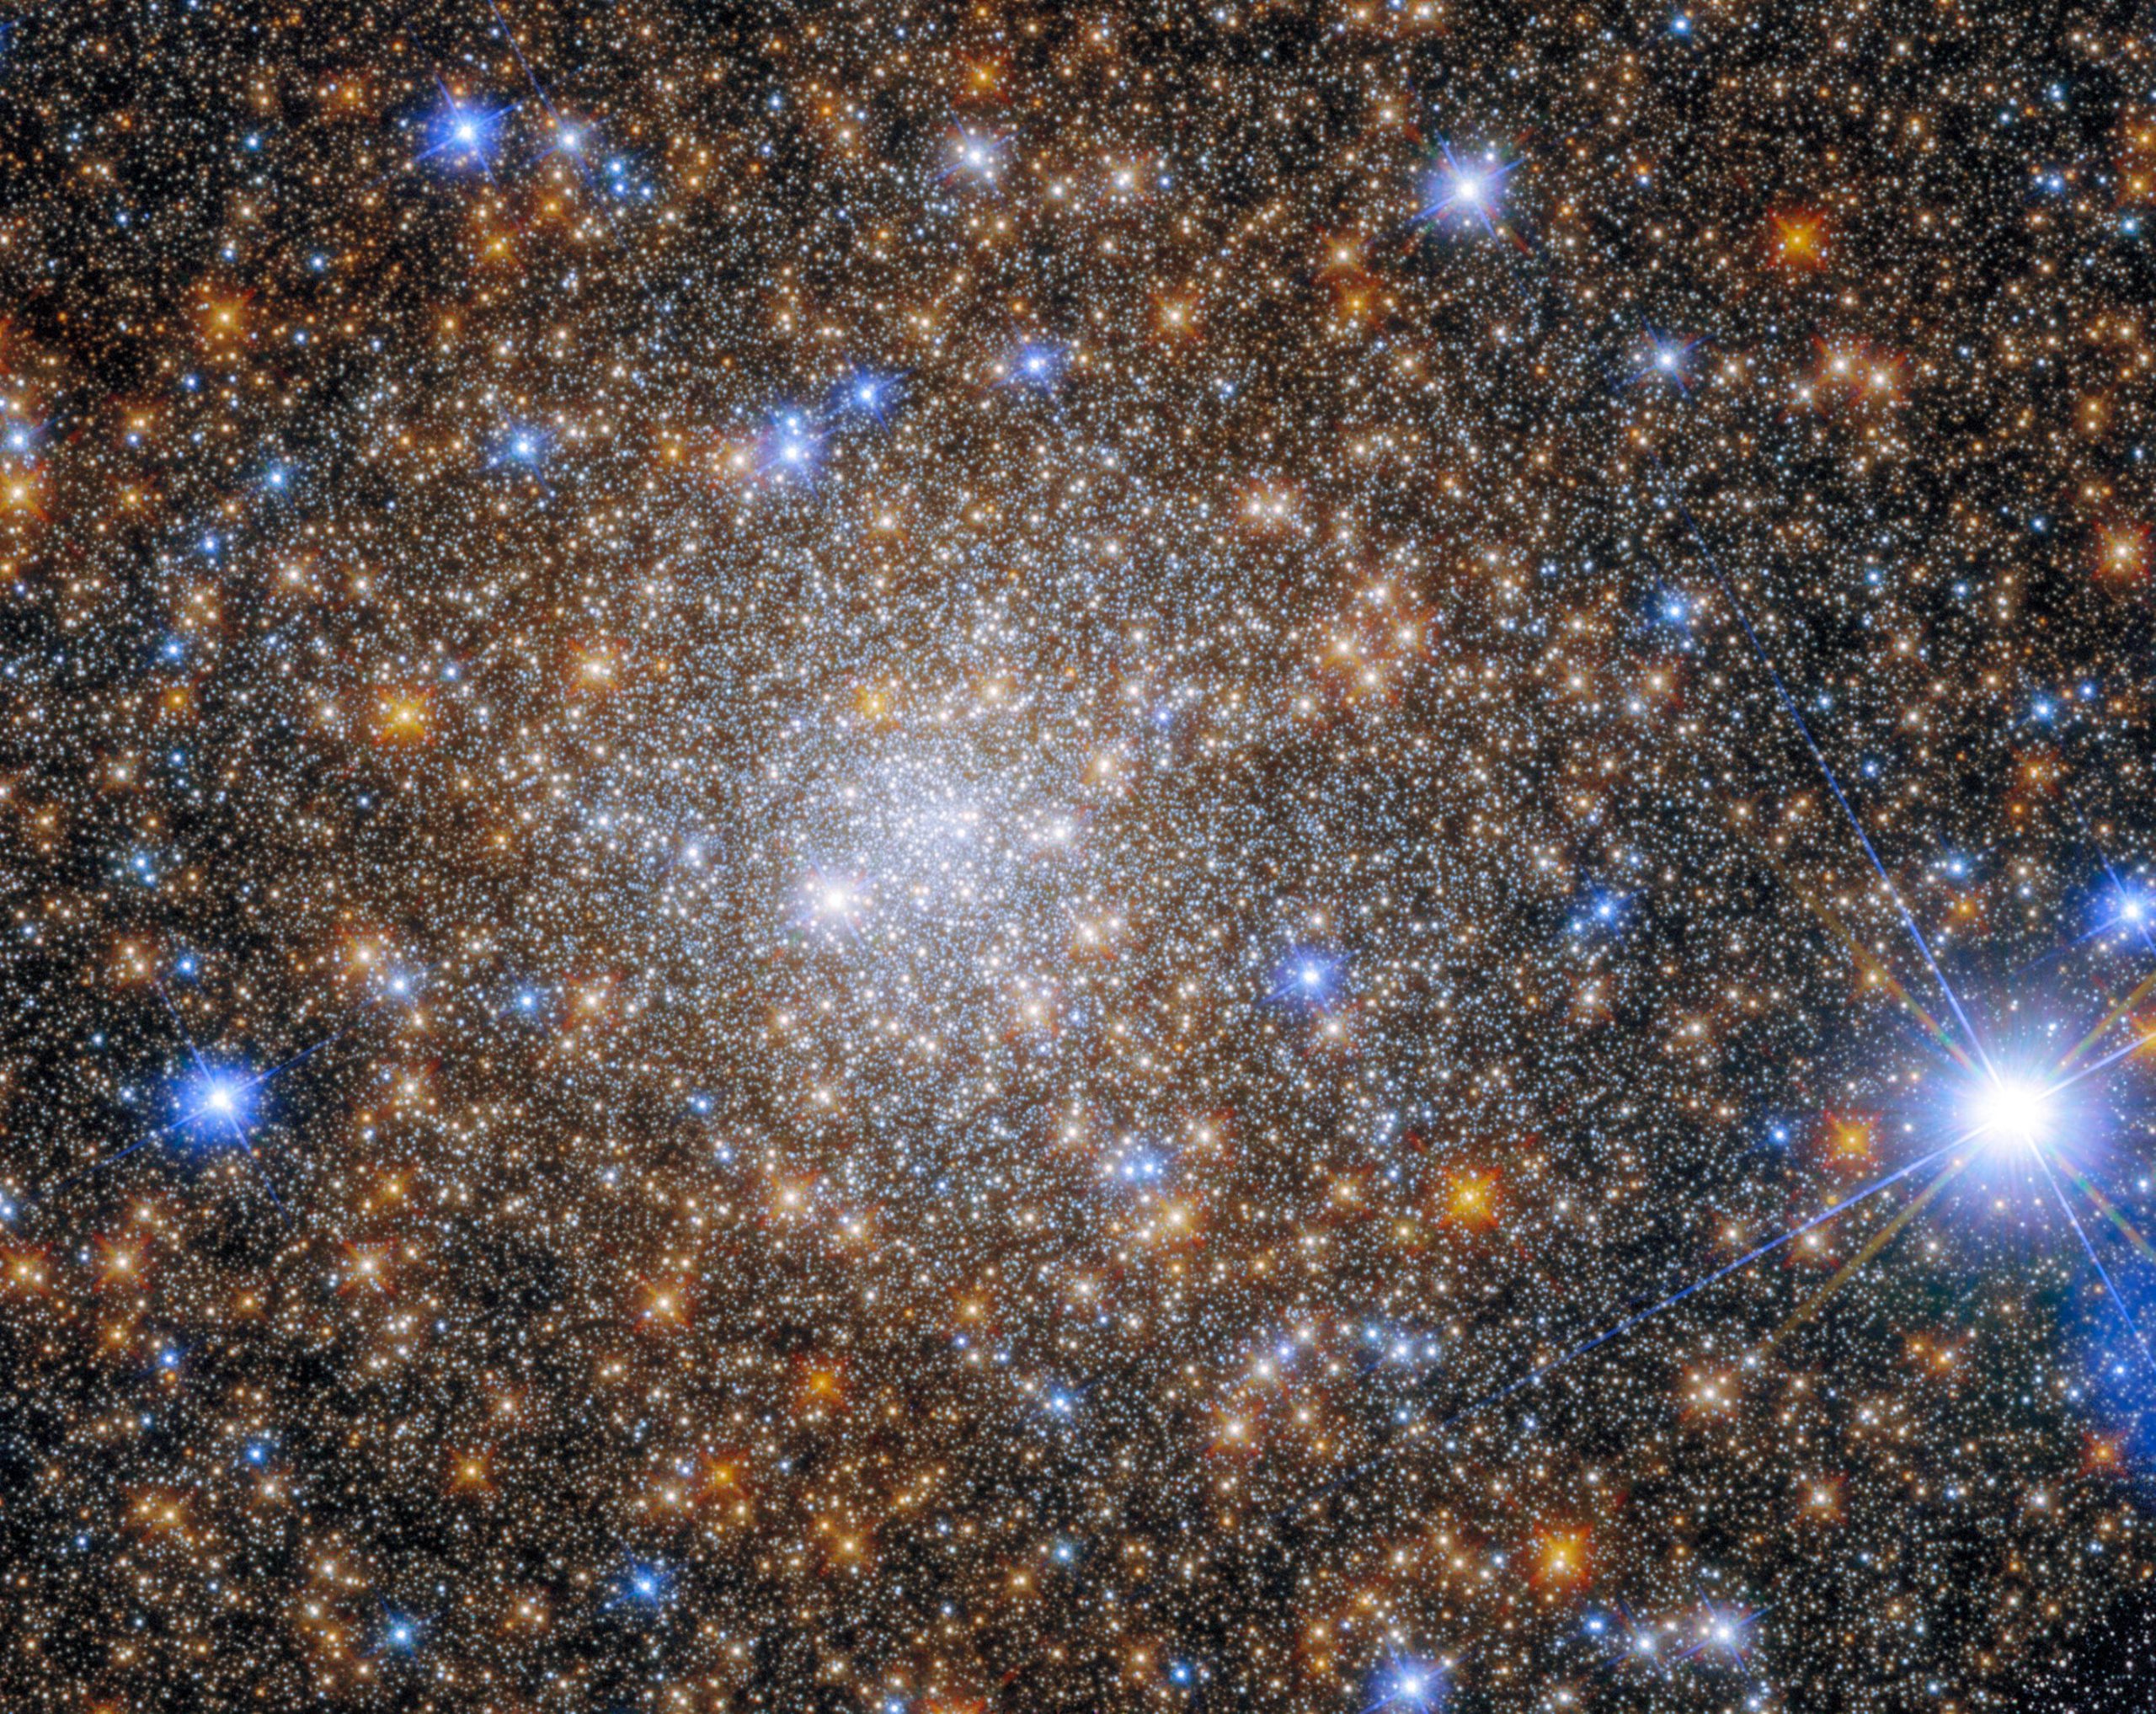 terzan-1-take-2-hubble-captures-a-dazzling-globular-cluster